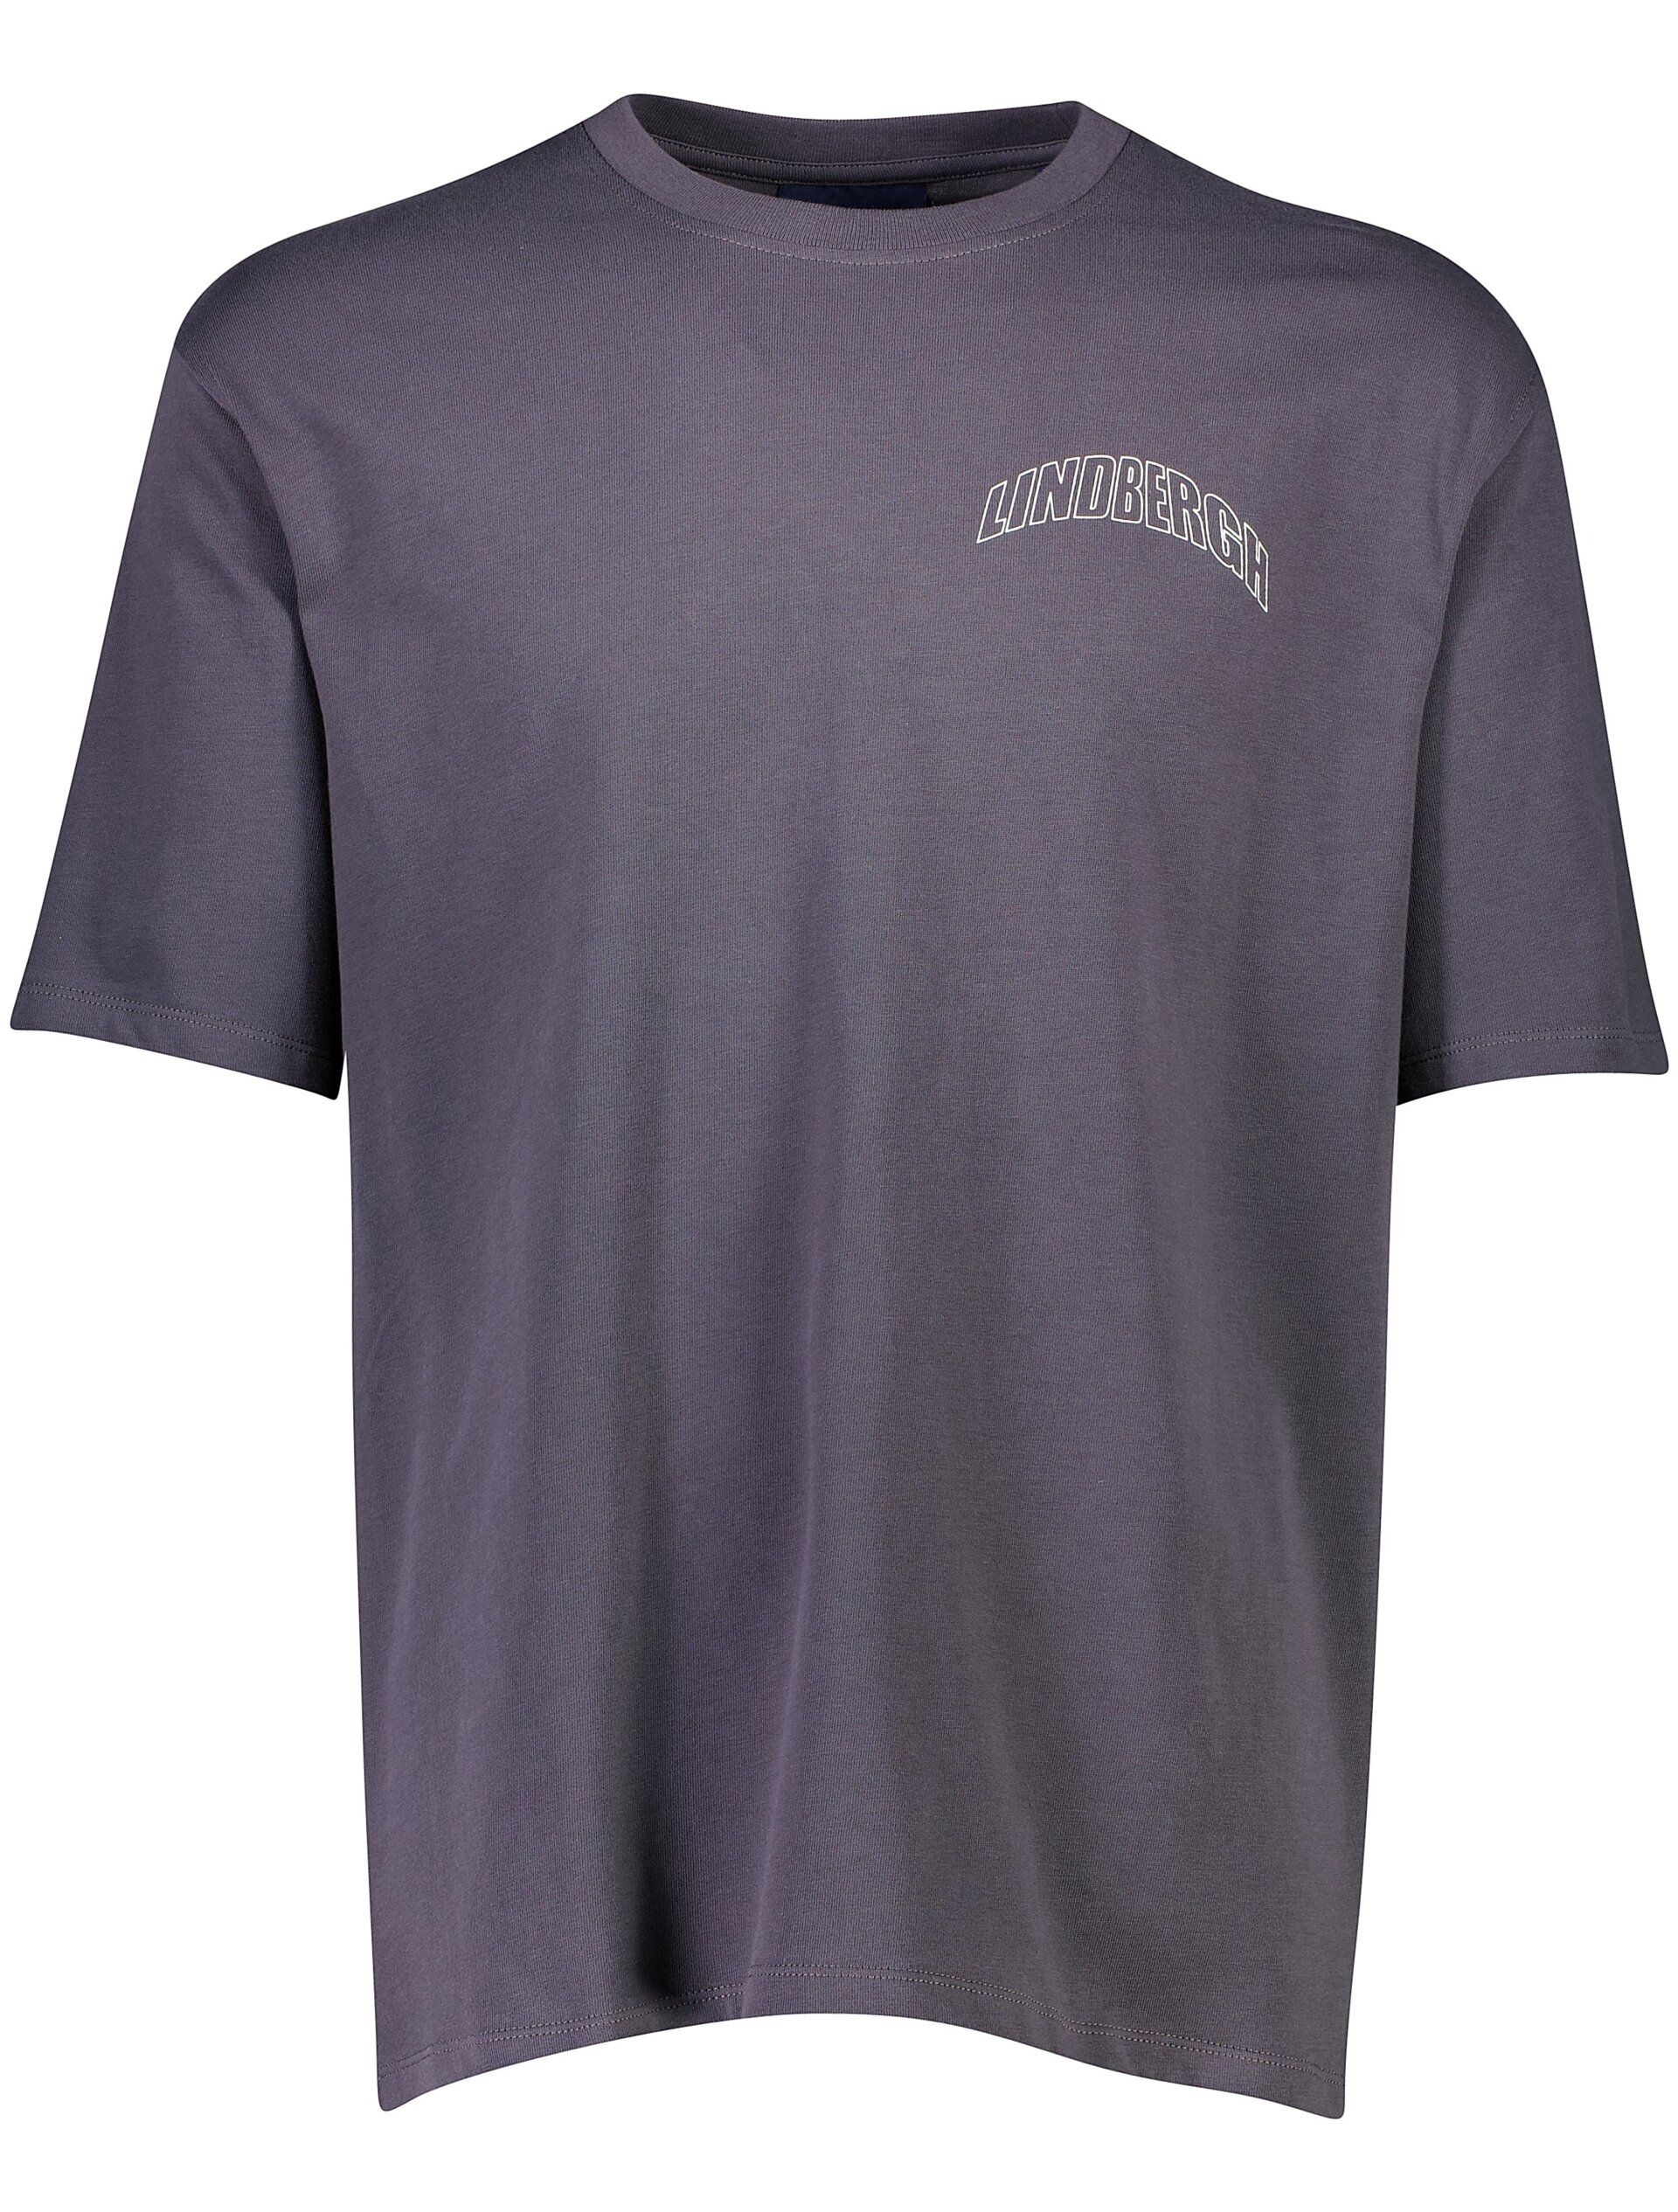 Lindbergh T-shirt grau / charcoal